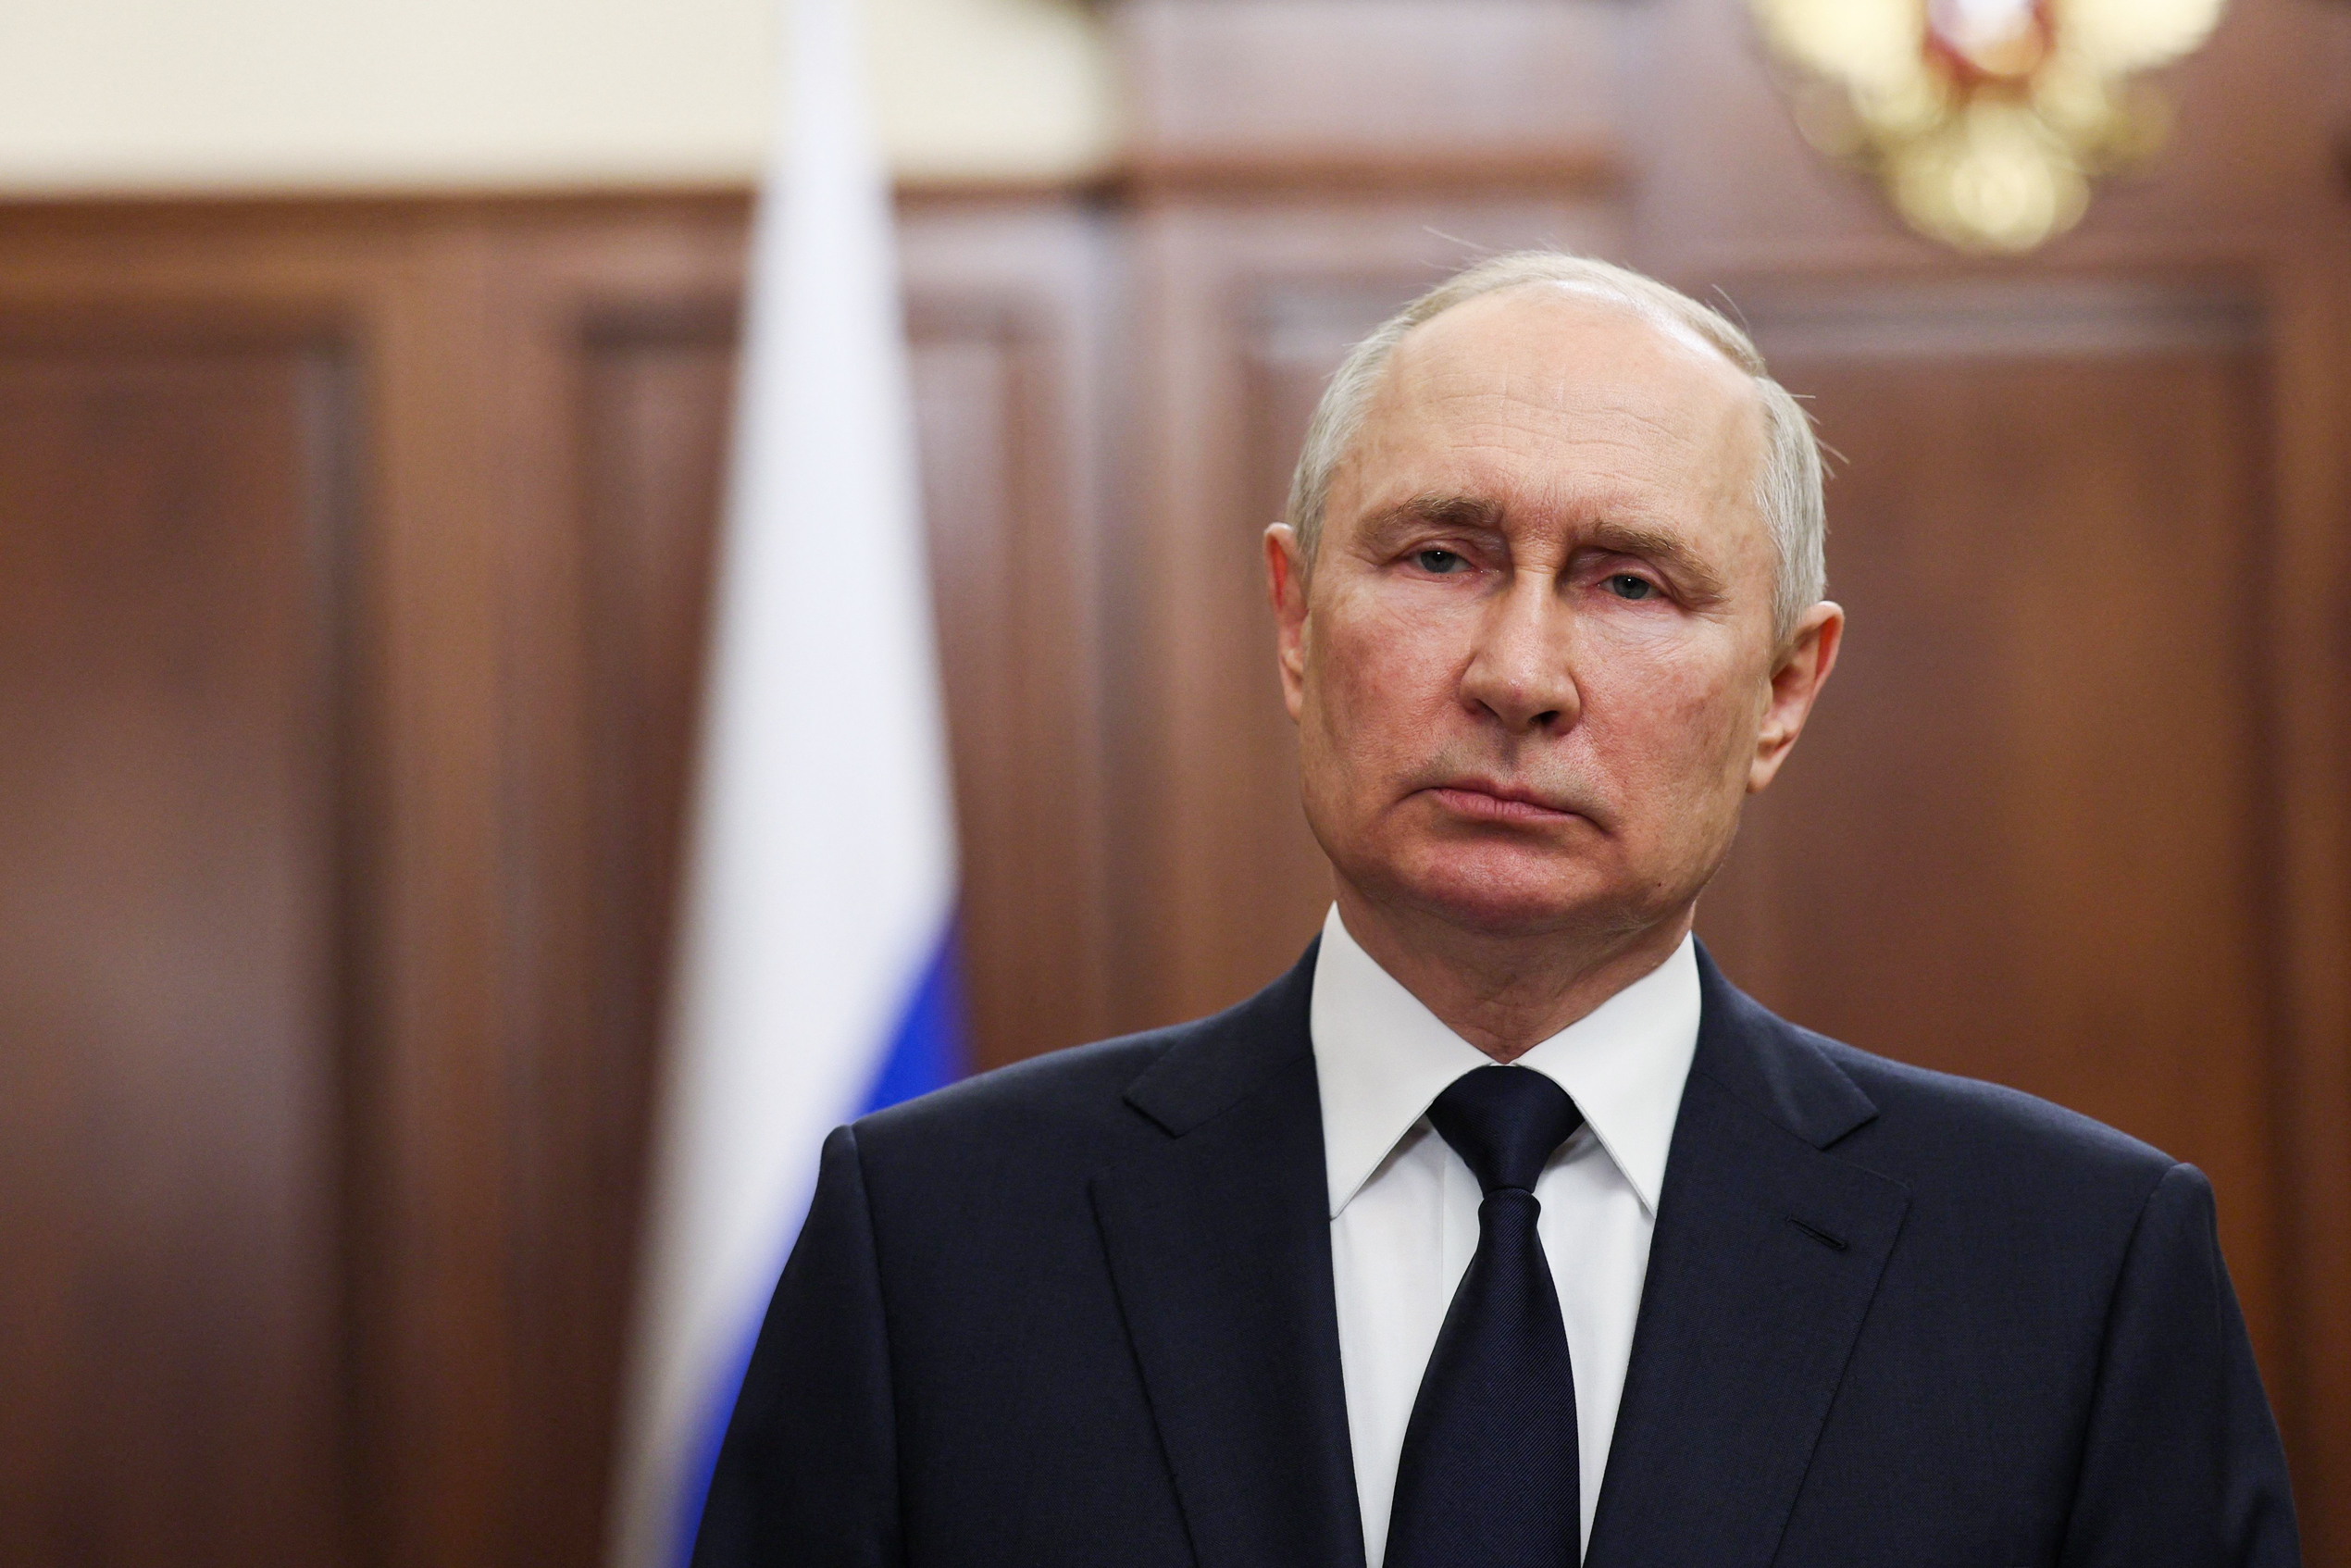 Putin’s speech sparks more confusion amid Russian turmoil